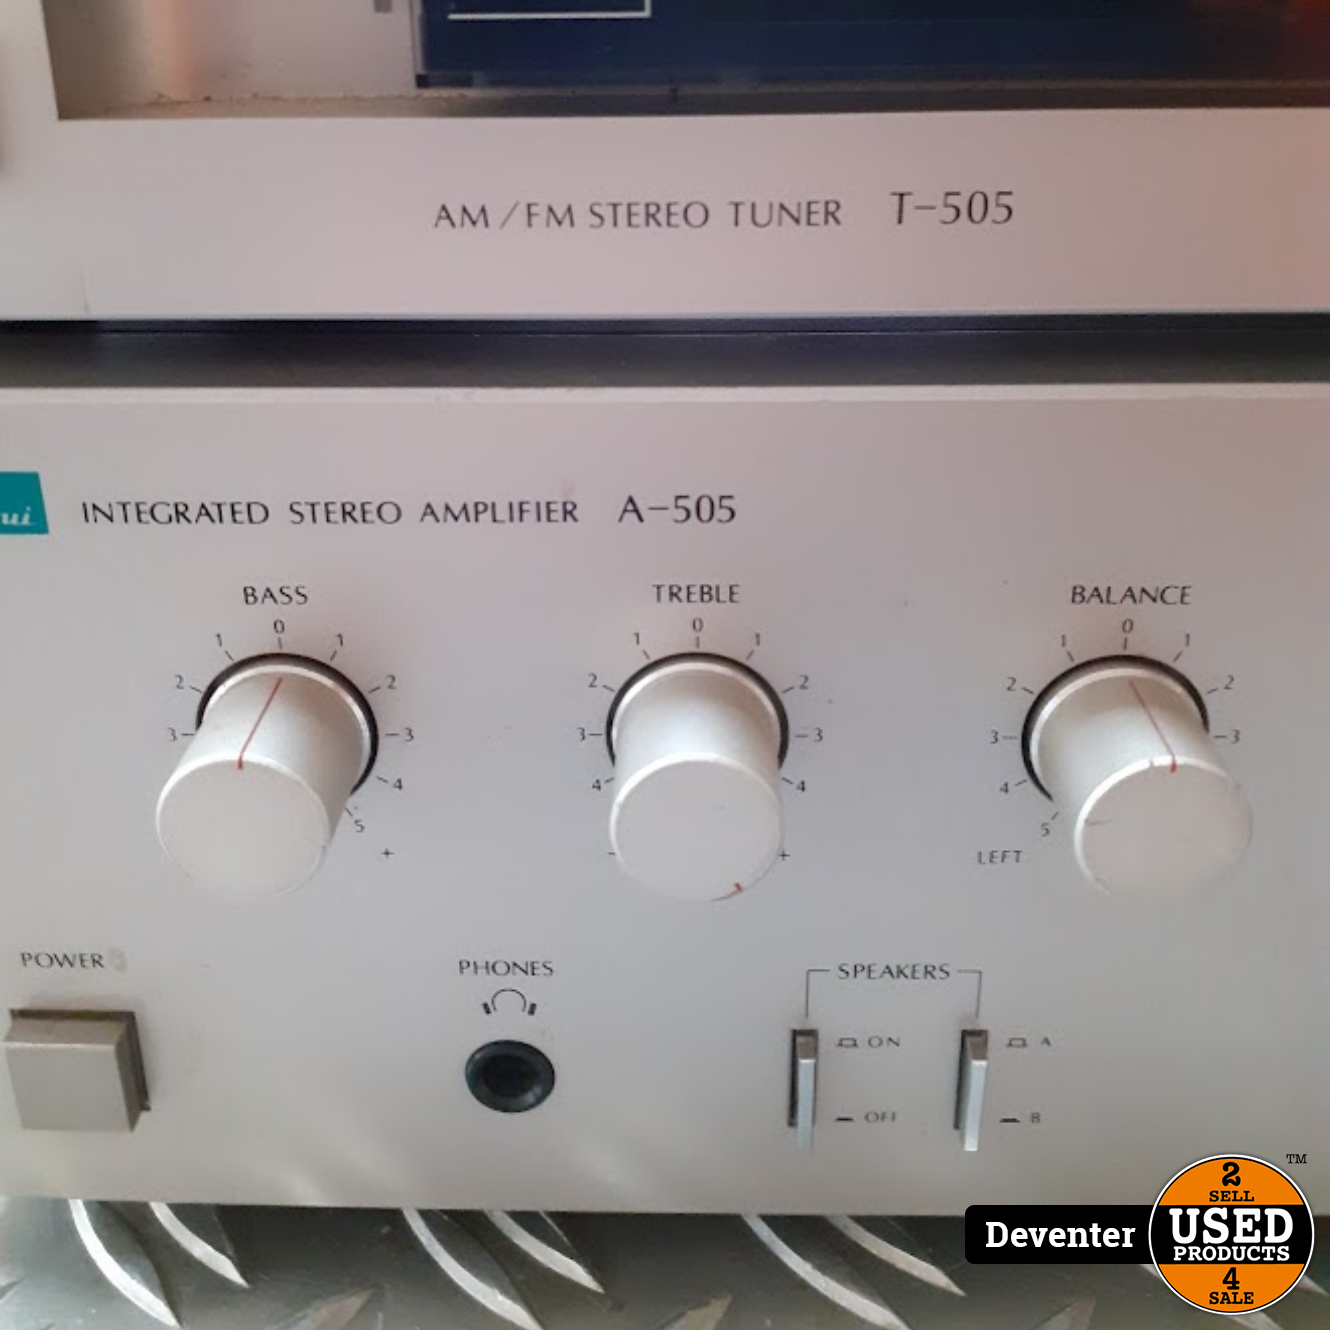 Dwingend Verzorgen Een goede vriend Sansui A 505 Stereo Versterker en T 505 AM/FM Stereo Tuner - Used Products  Deventer